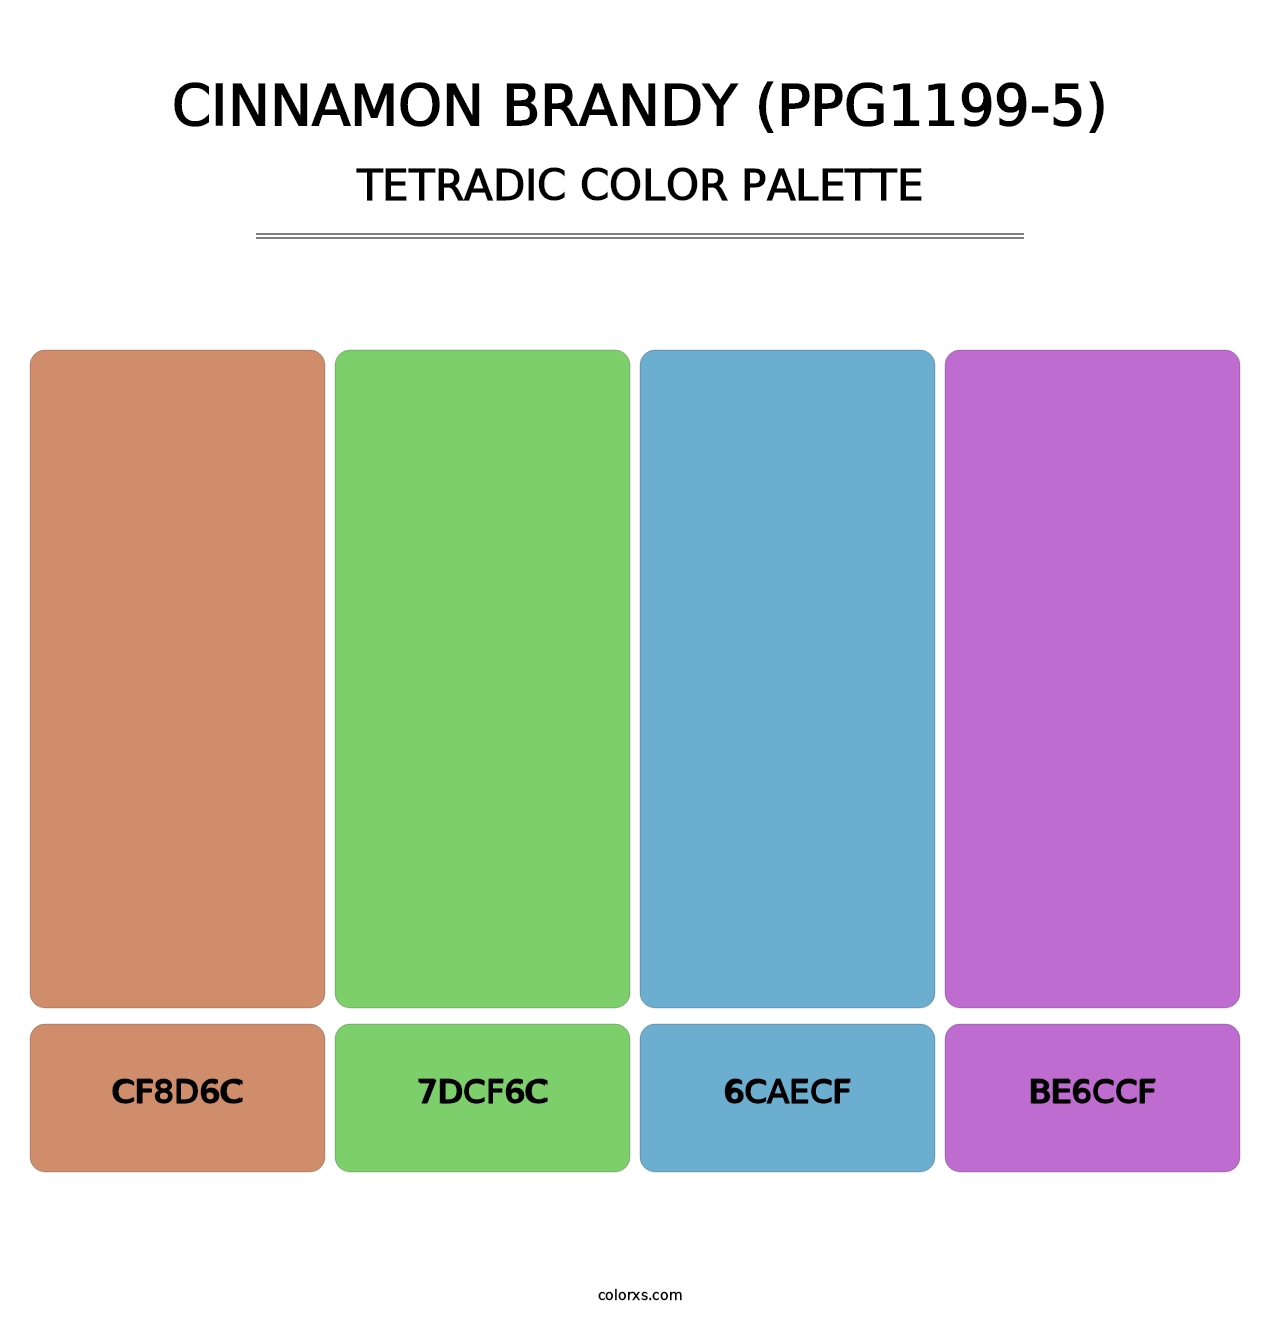 Cinnamon Brandy (PPG1199-5) - Tetradic Color Palette